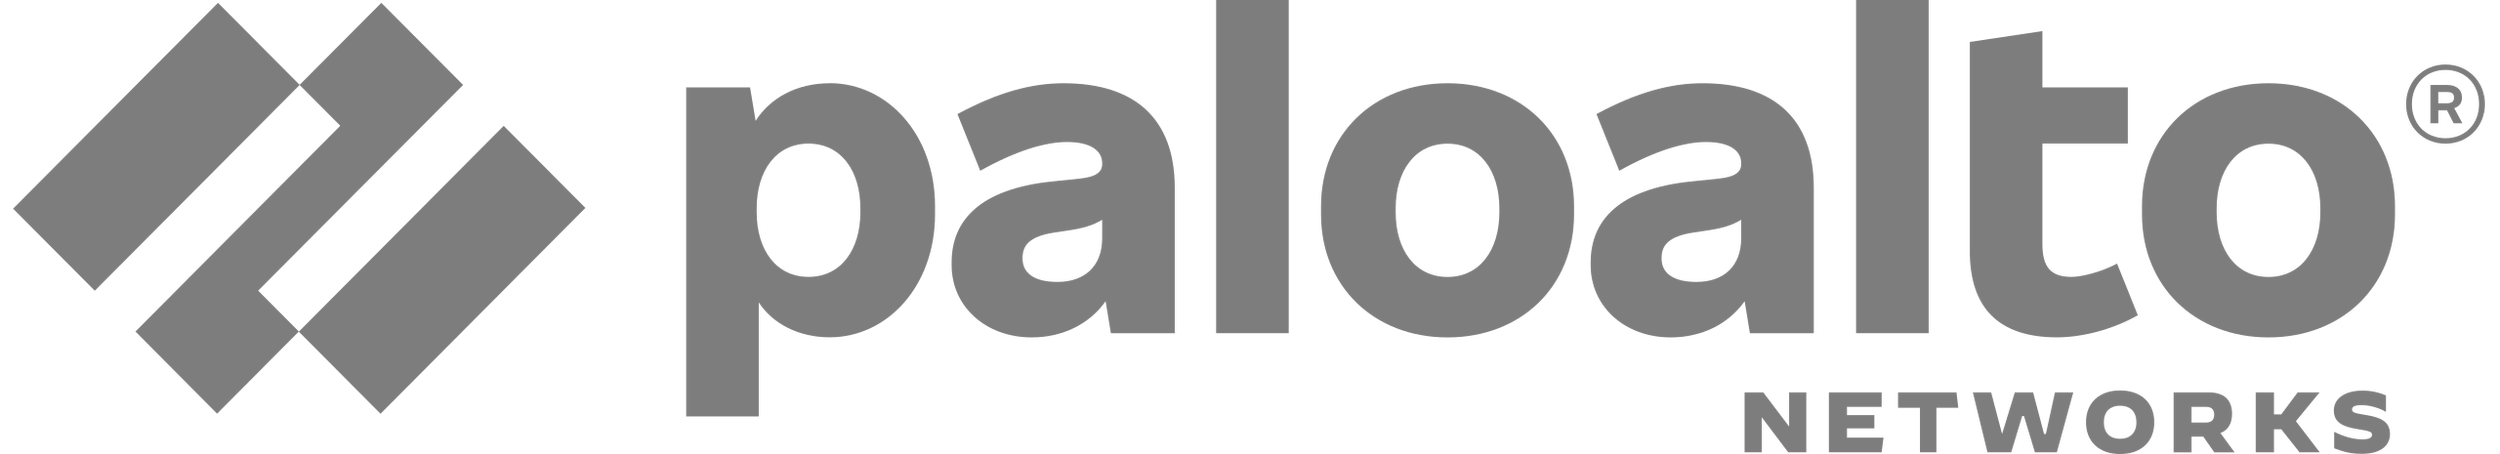 PaloAltoNetworks_2020_Logo_gray.png